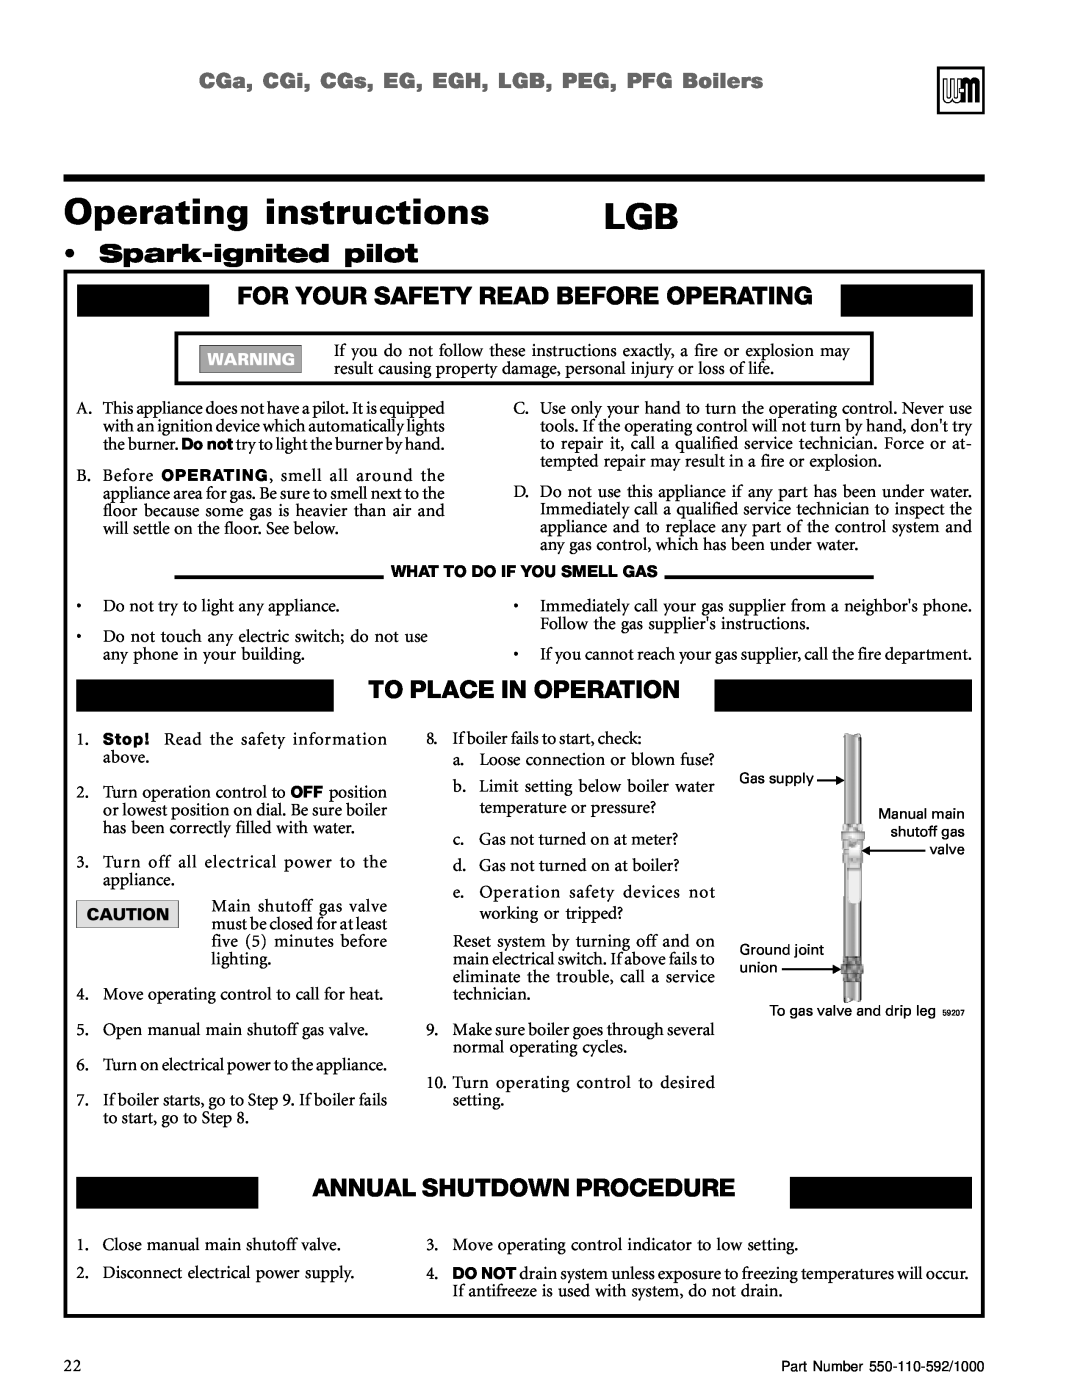 Weil-McLain manual To Place In Operation, Annual Shutdown Procedure, CGa,CGi,CGs,EG,EGH,LGB,PEG,PFGBoilers 